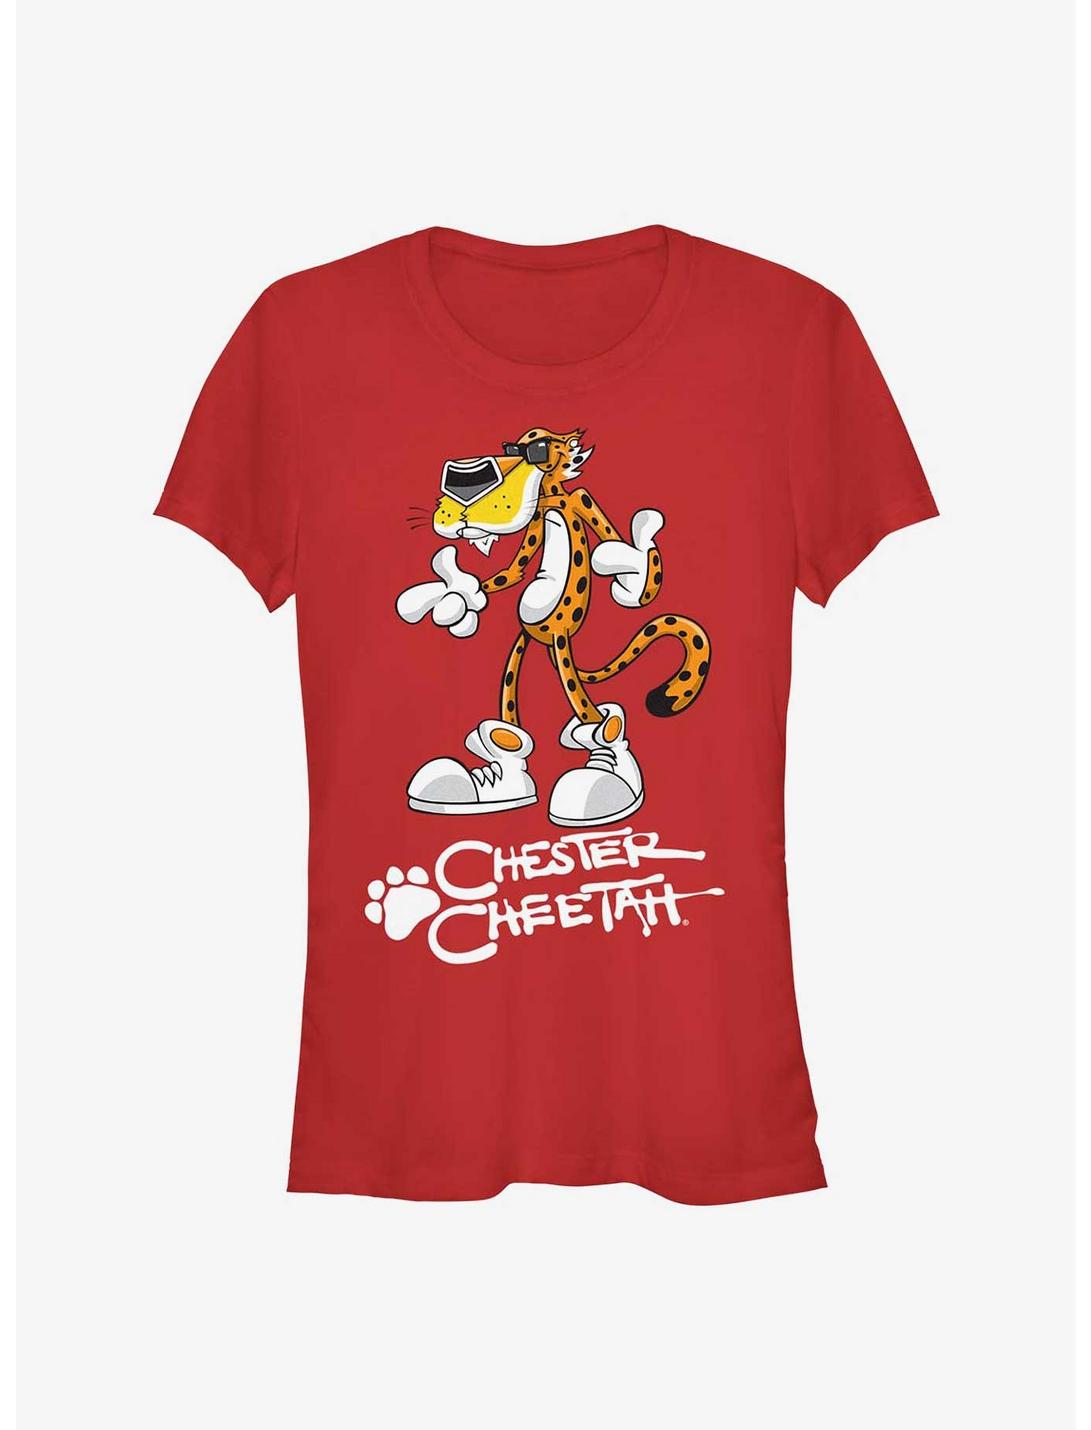 Cheetos Standing Chester Cheetah Girls T-Shirt, RED, hi-res